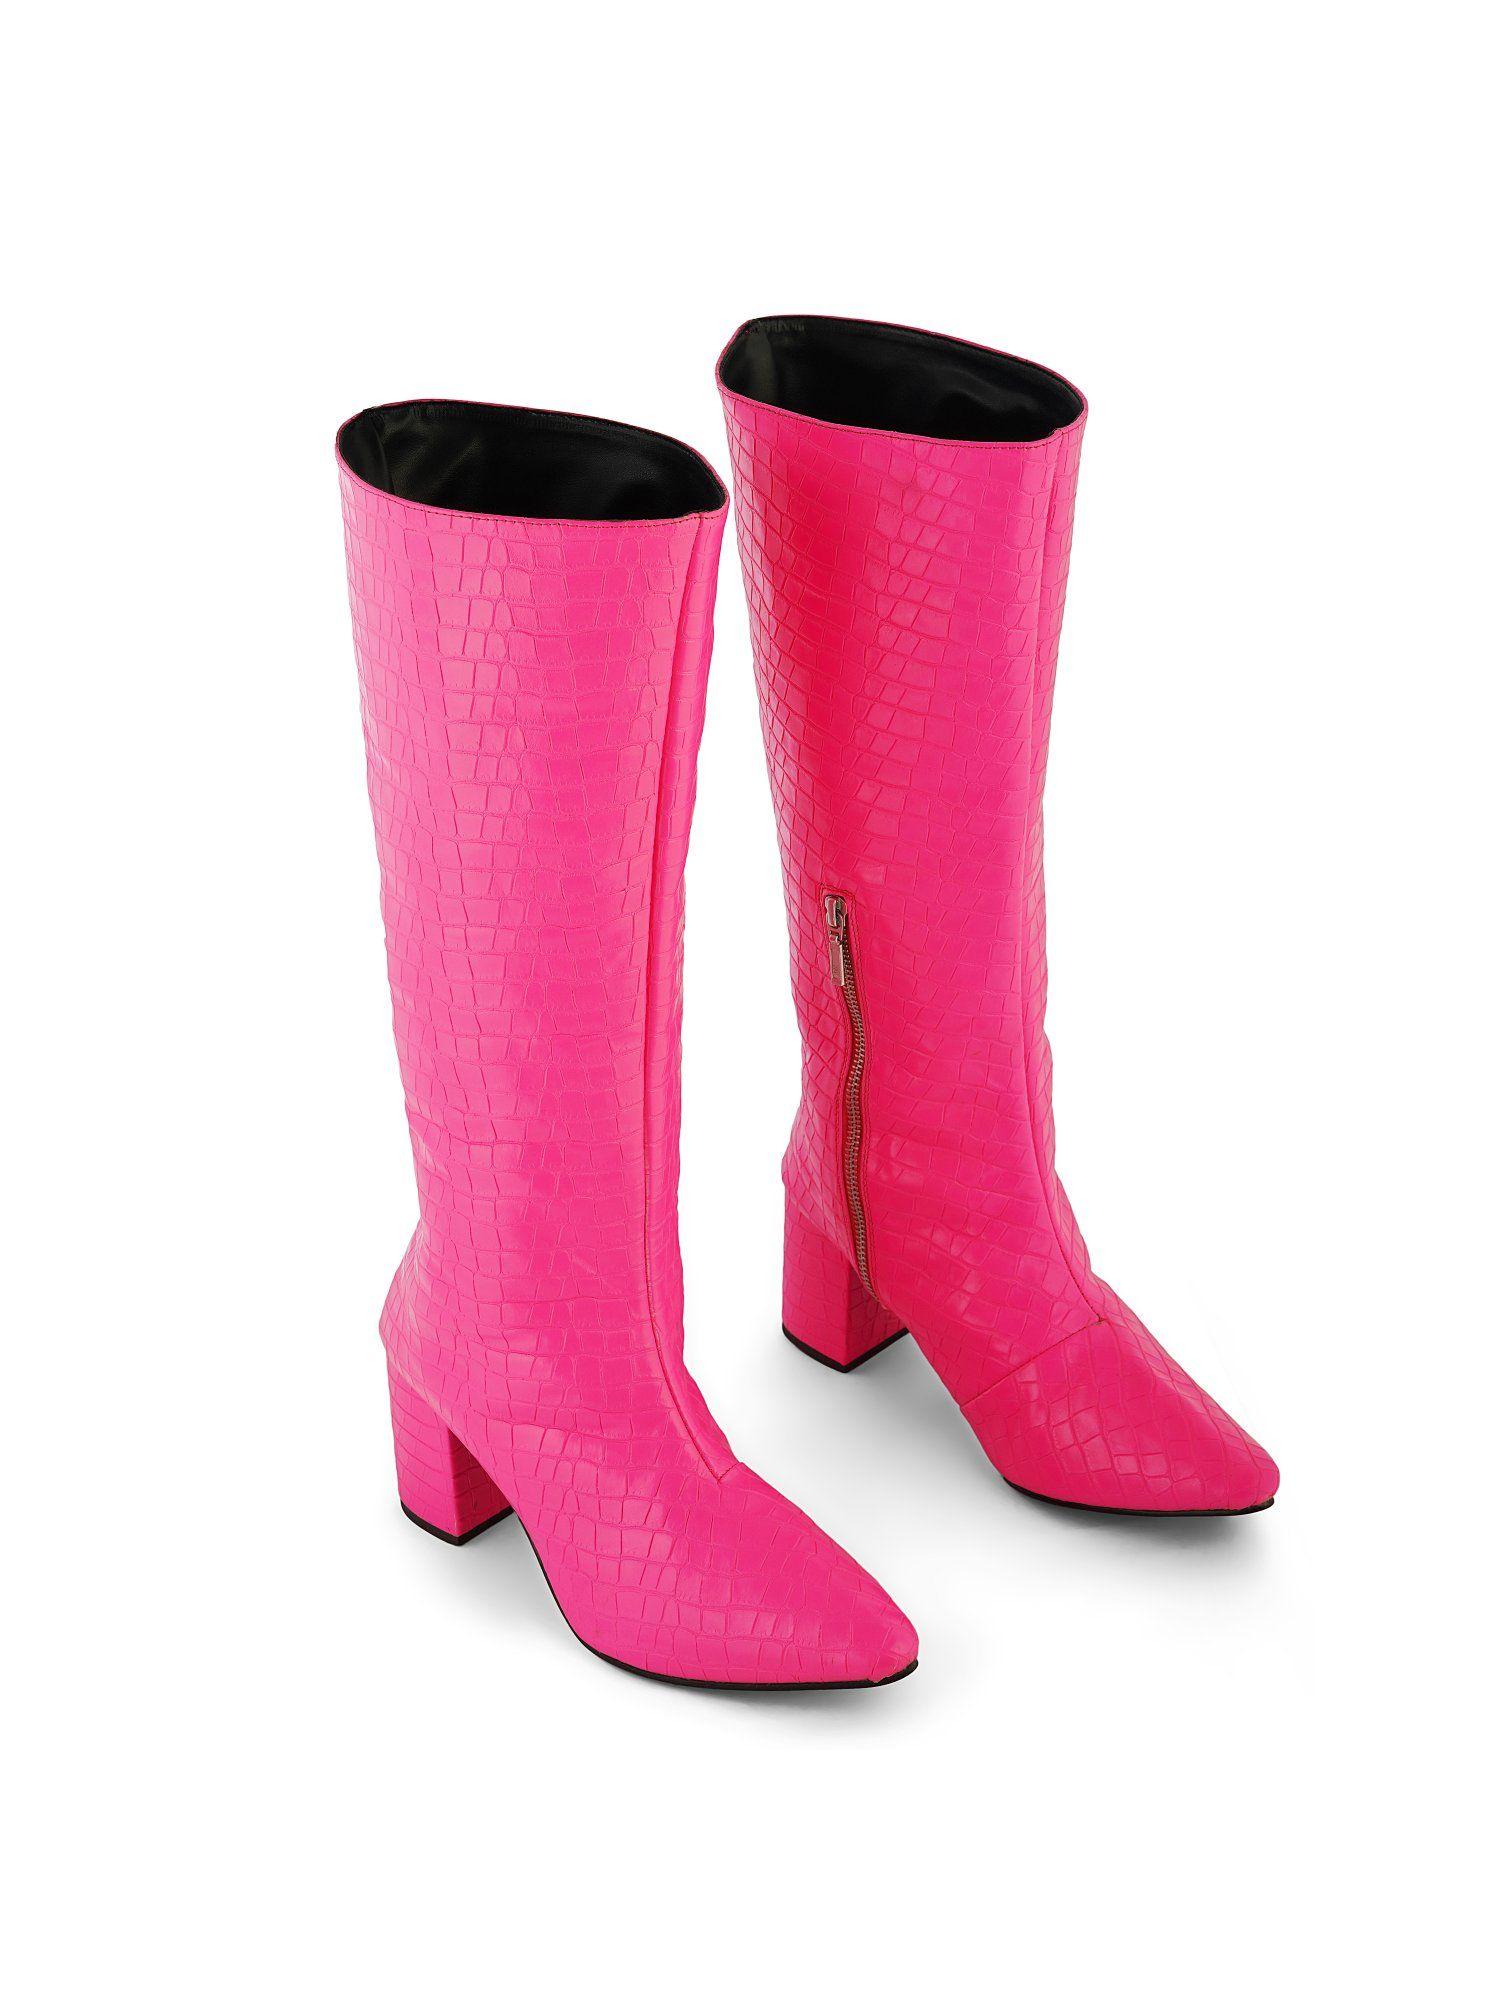 dezire rosé-textured pink croc knee high boots